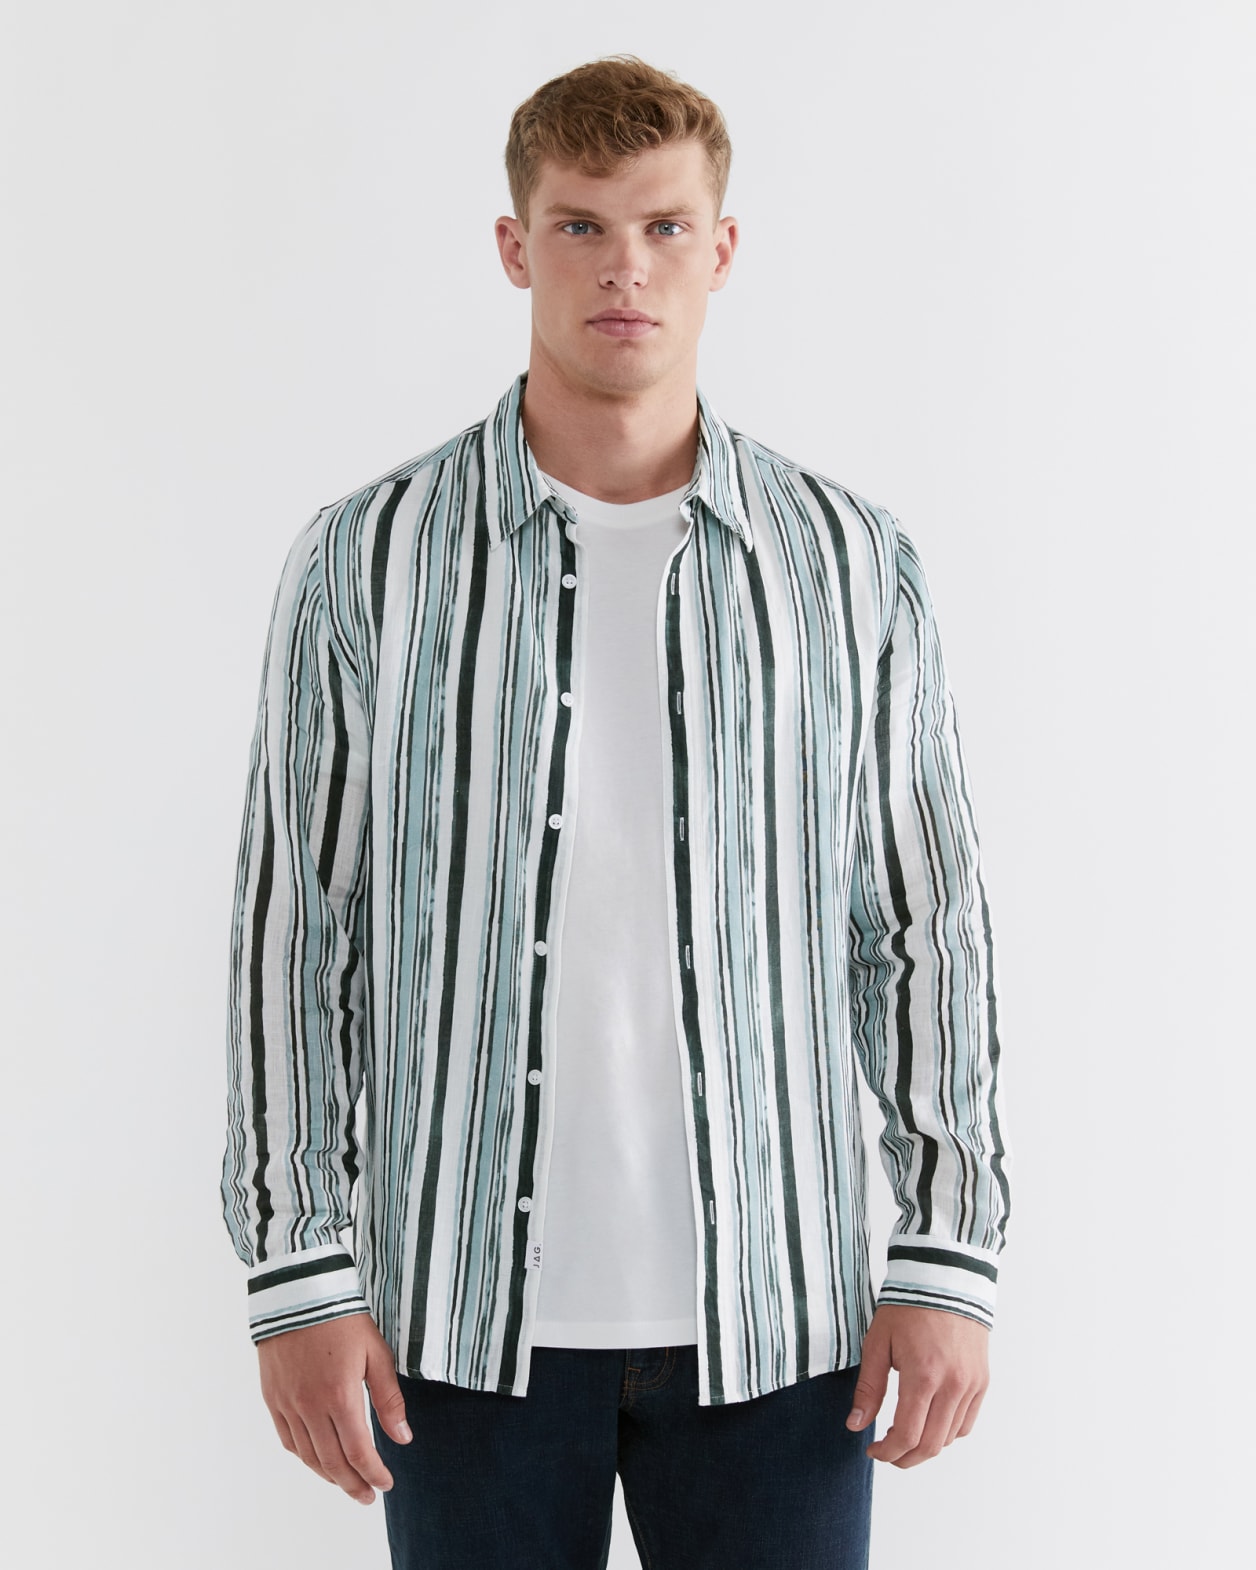 Hux Linen Rustic Stripe Shirt in MILITARY